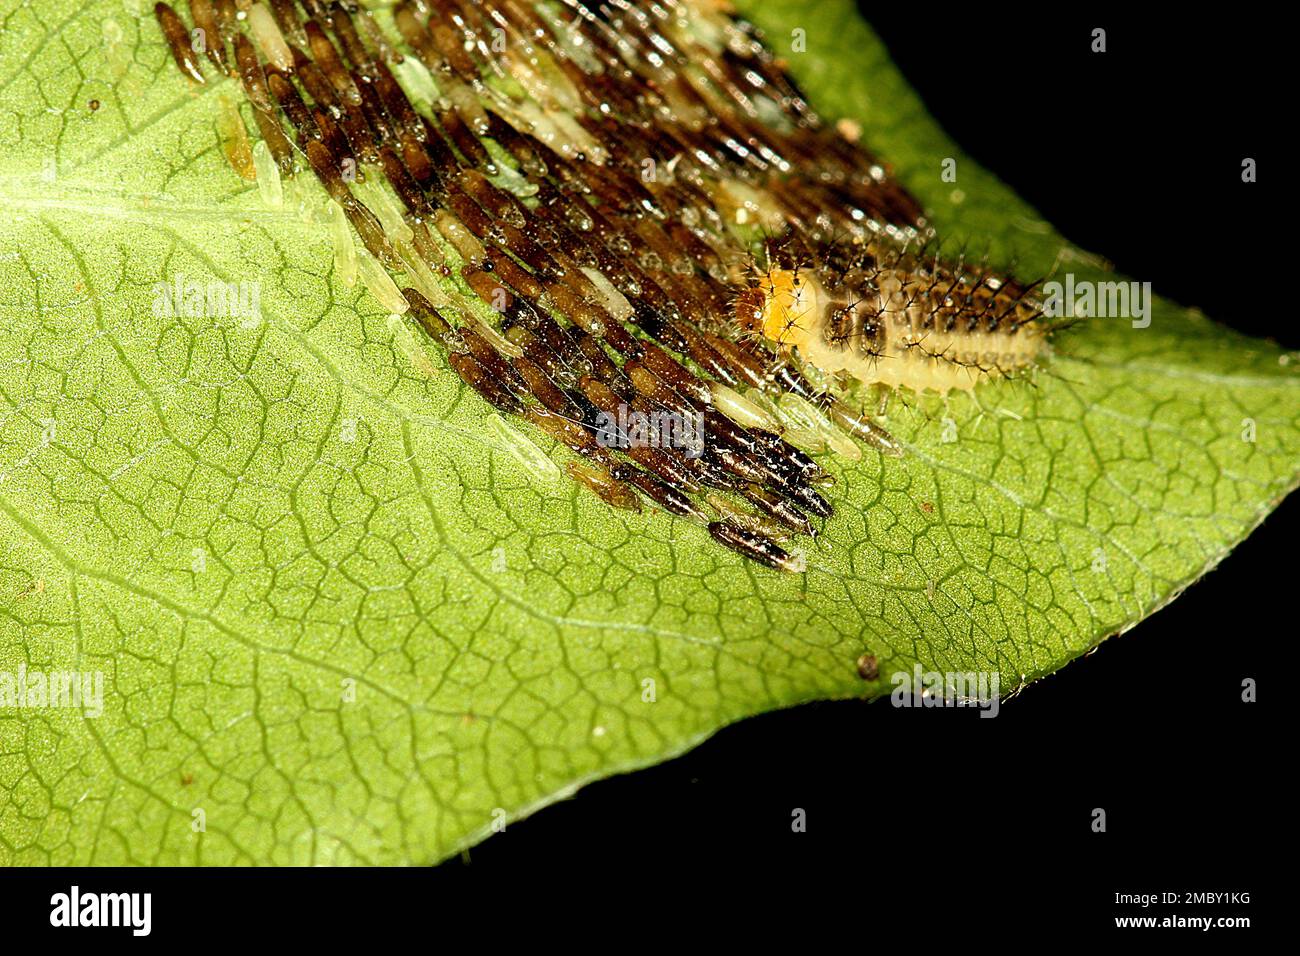 Ladybird beetles (Harmonia, Adalia, Halmus spp.) Stock Photo